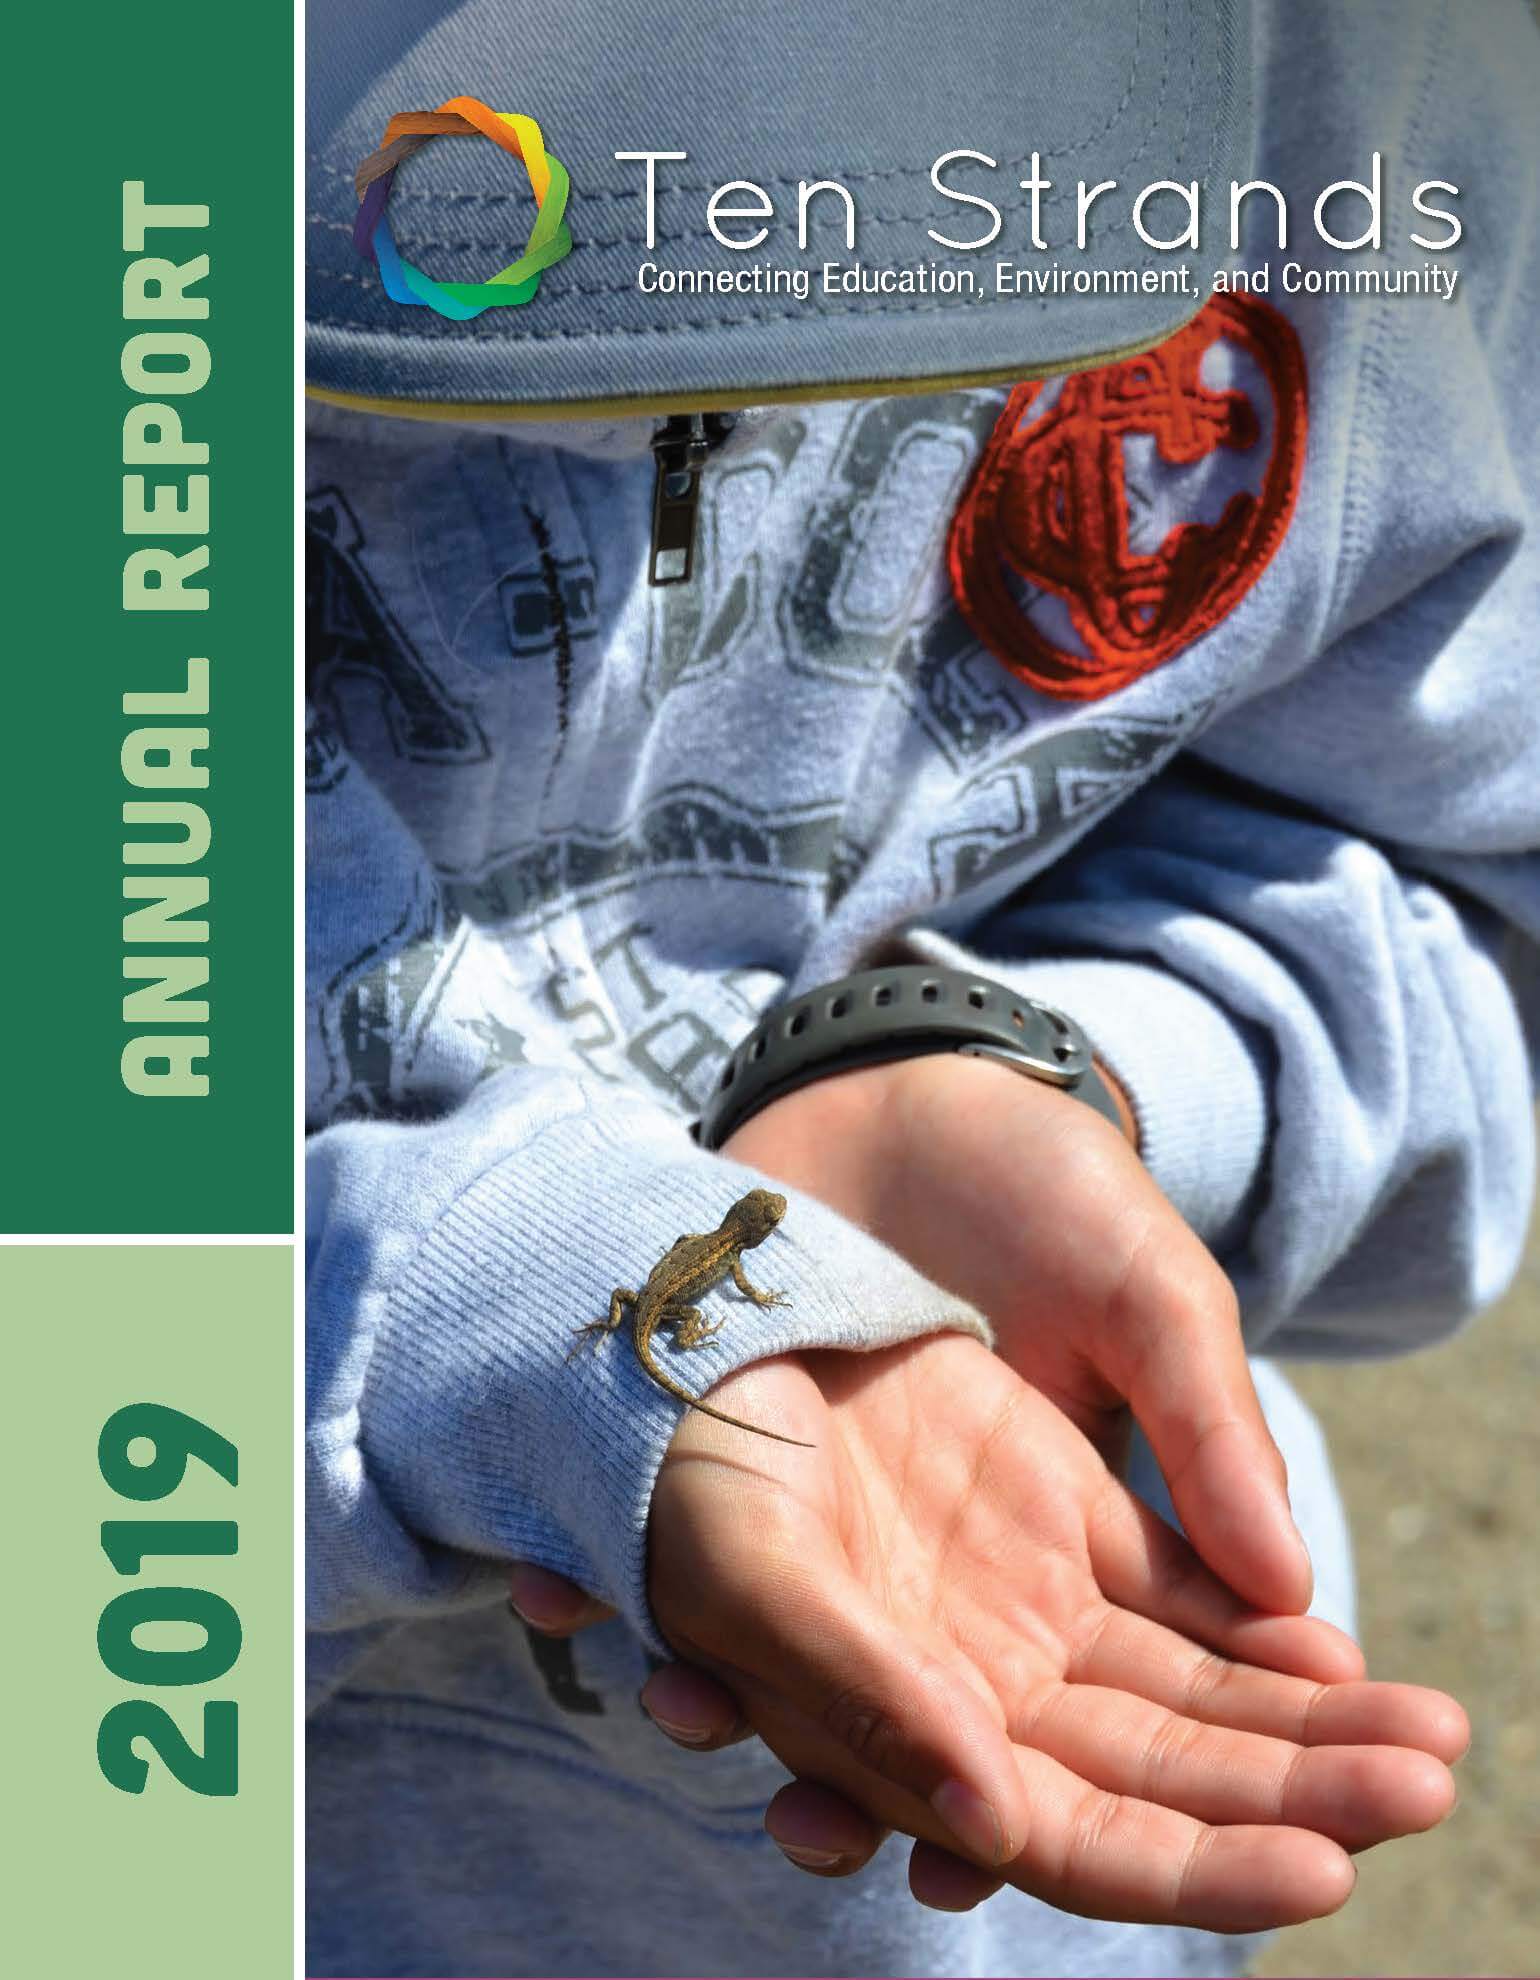 2019 Ten Strands Annual Report